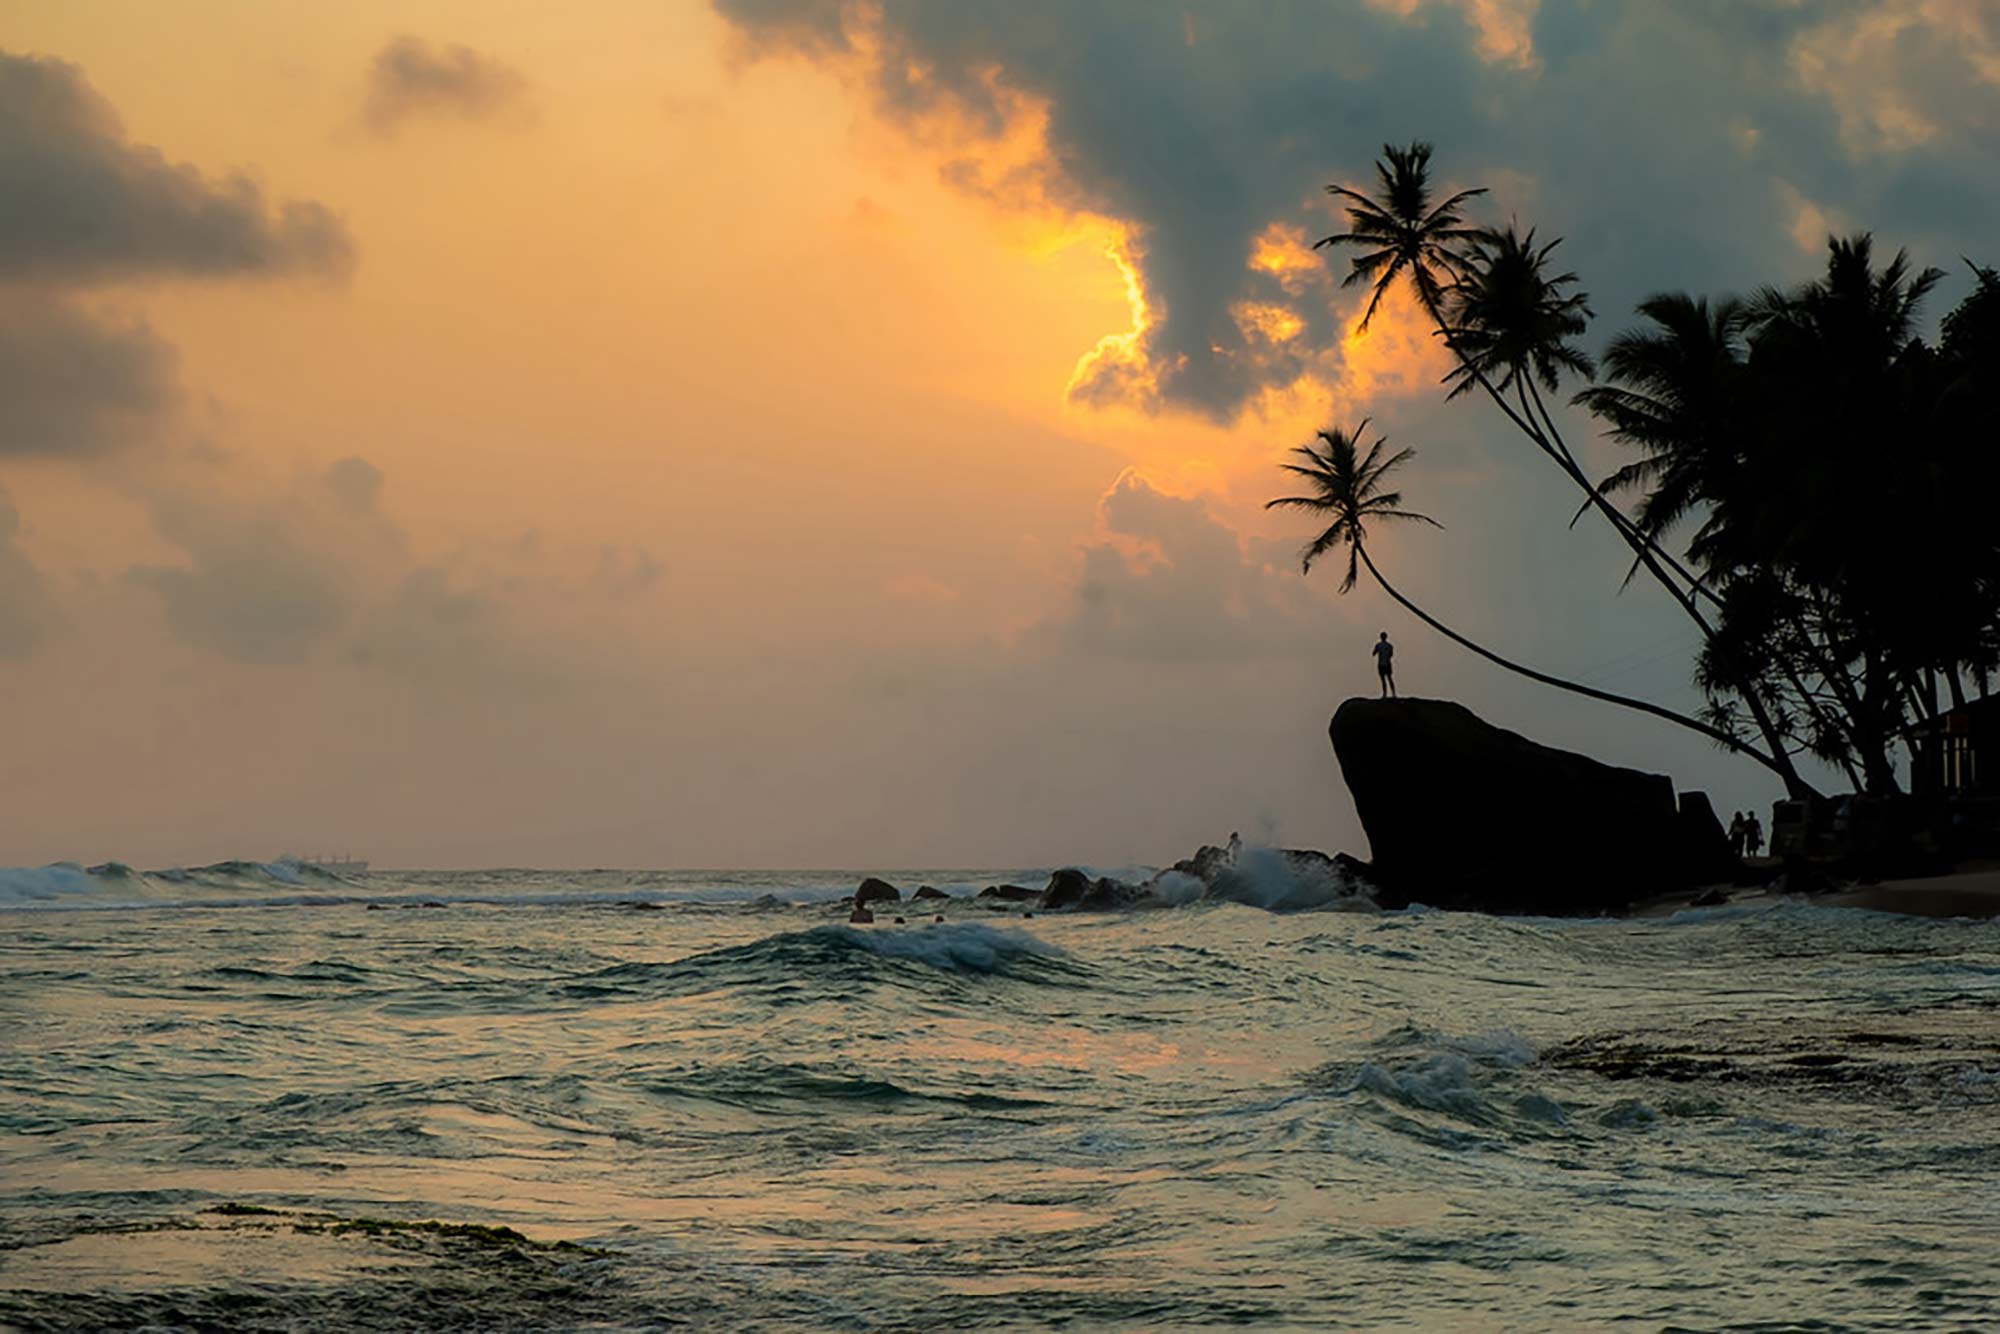 https://dev.soulandsurf.com/wp-content/uploads/2021/08/Lanka-Guide-Images-Wijaya-Beach-pc-G.S.-Matthews.jpg